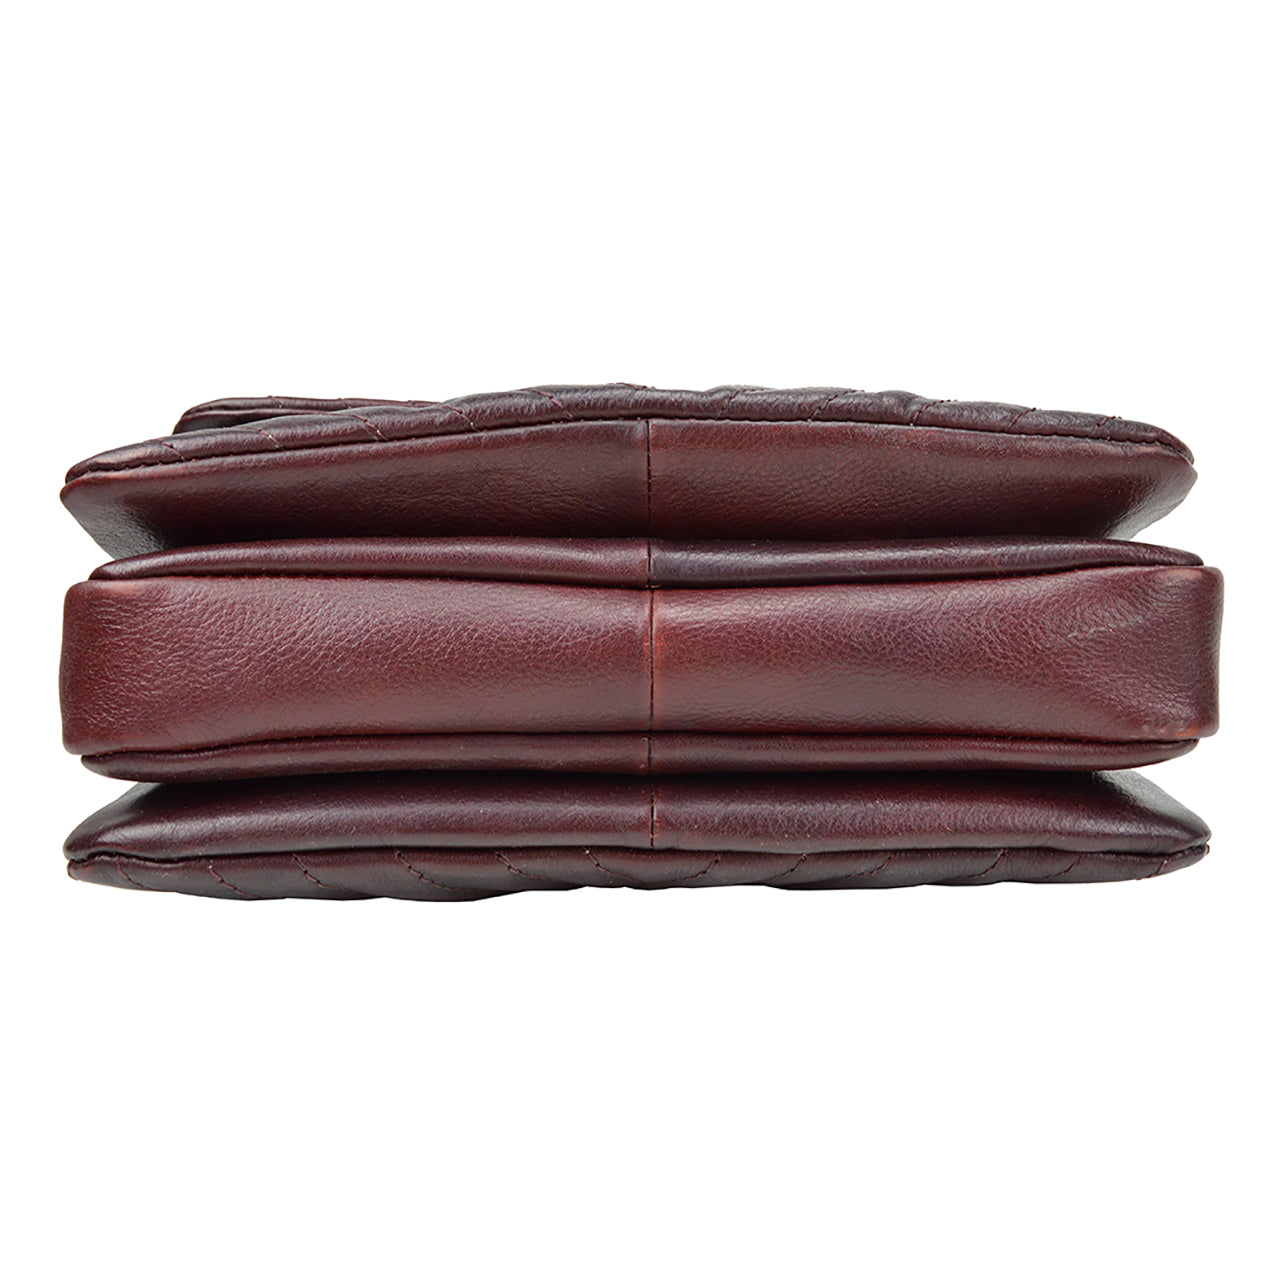 Pratesi Pian di Melosa Lady Bag in genuine Italian leather - Pian di Melosa Brown